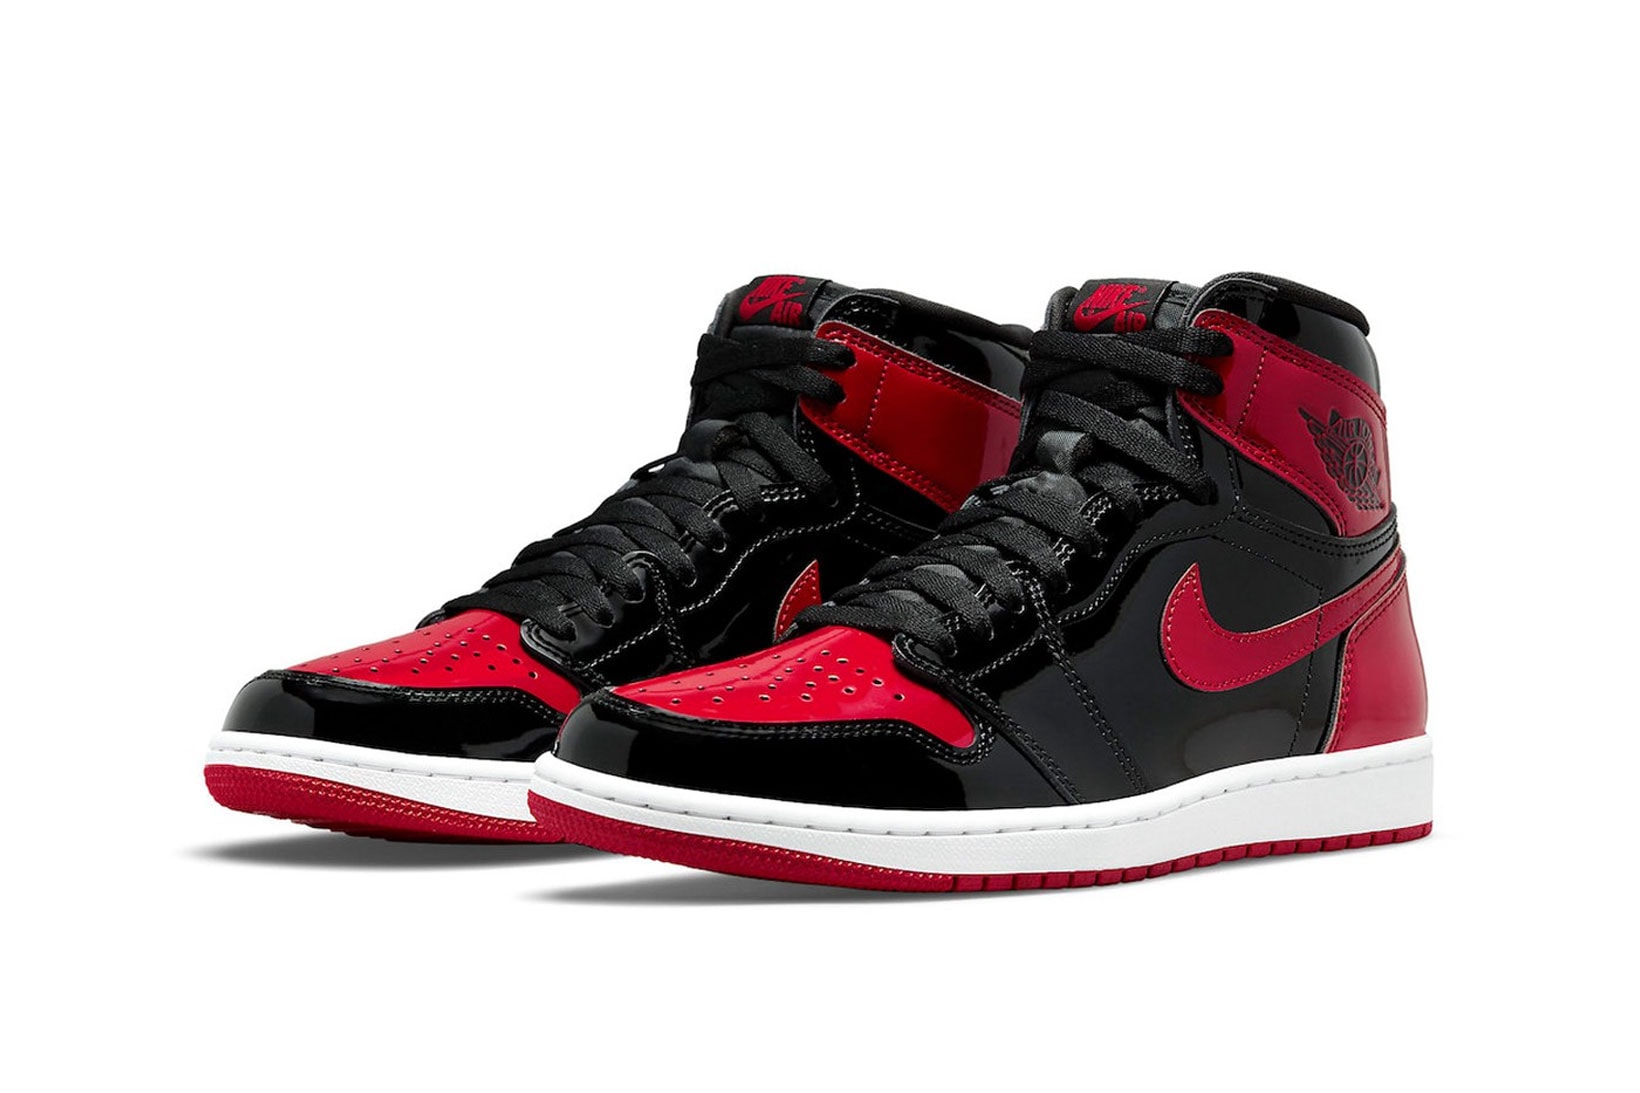 Nike Air Jordan 1 High OG Patent Bred Red Black Sneakers Upper Shoelaces Swoosh